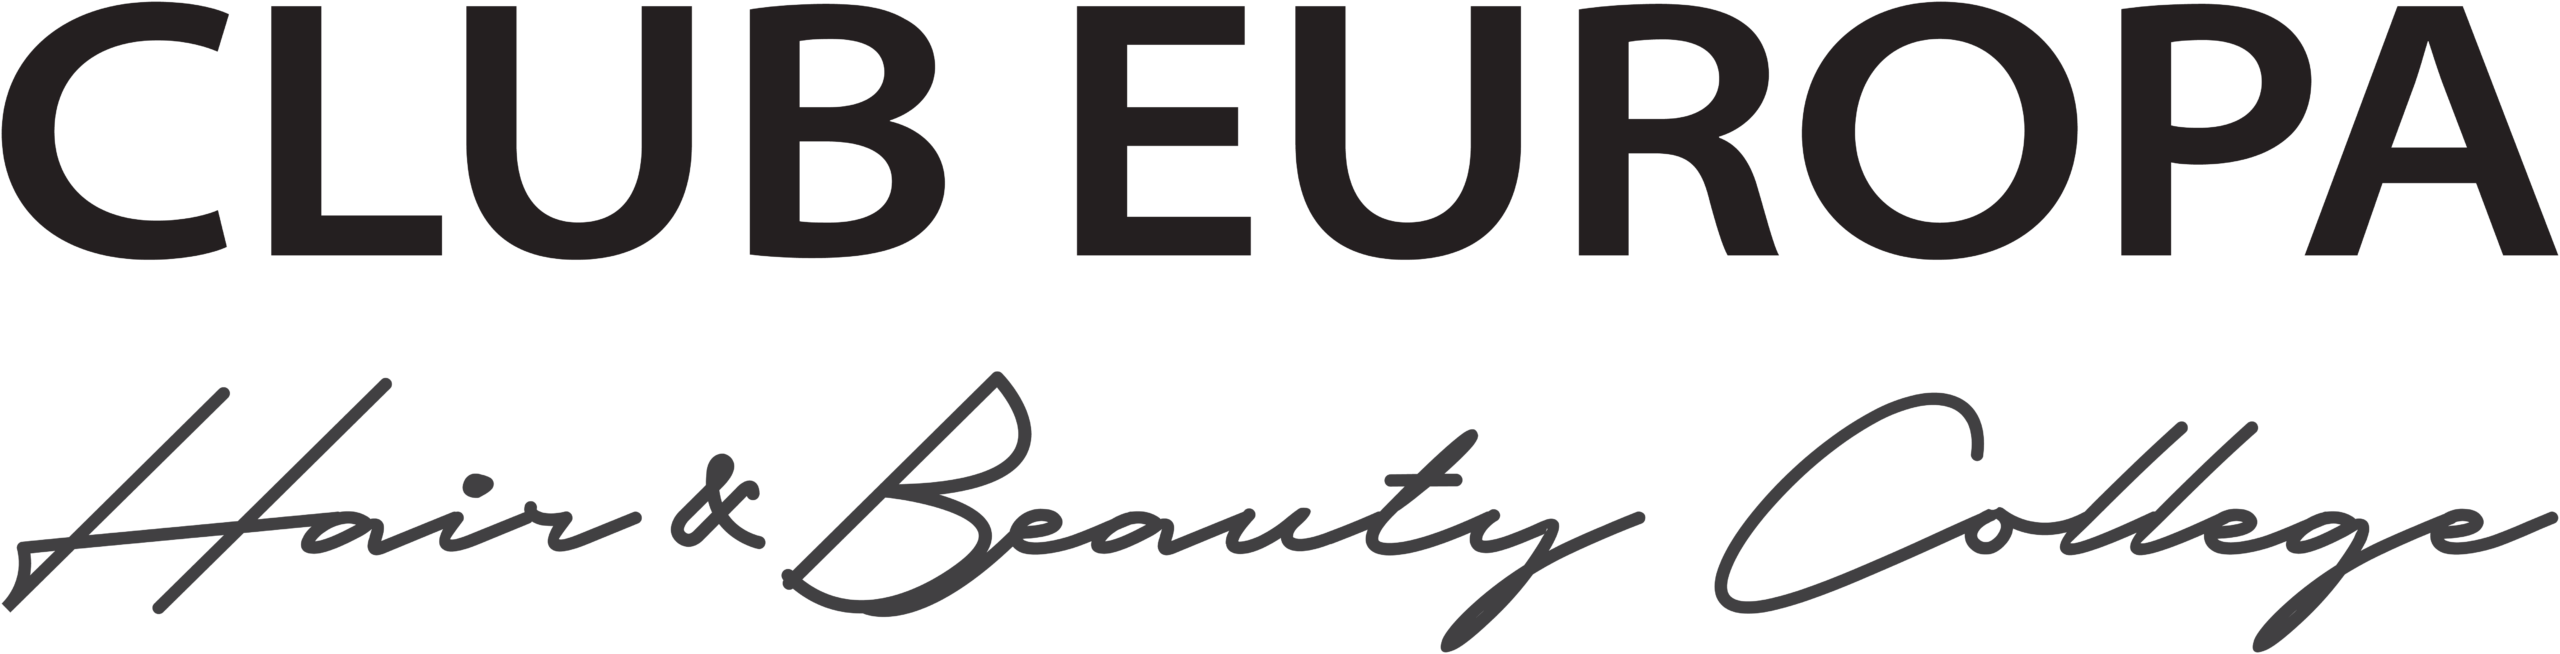 Club Europa Hair&Beauty College